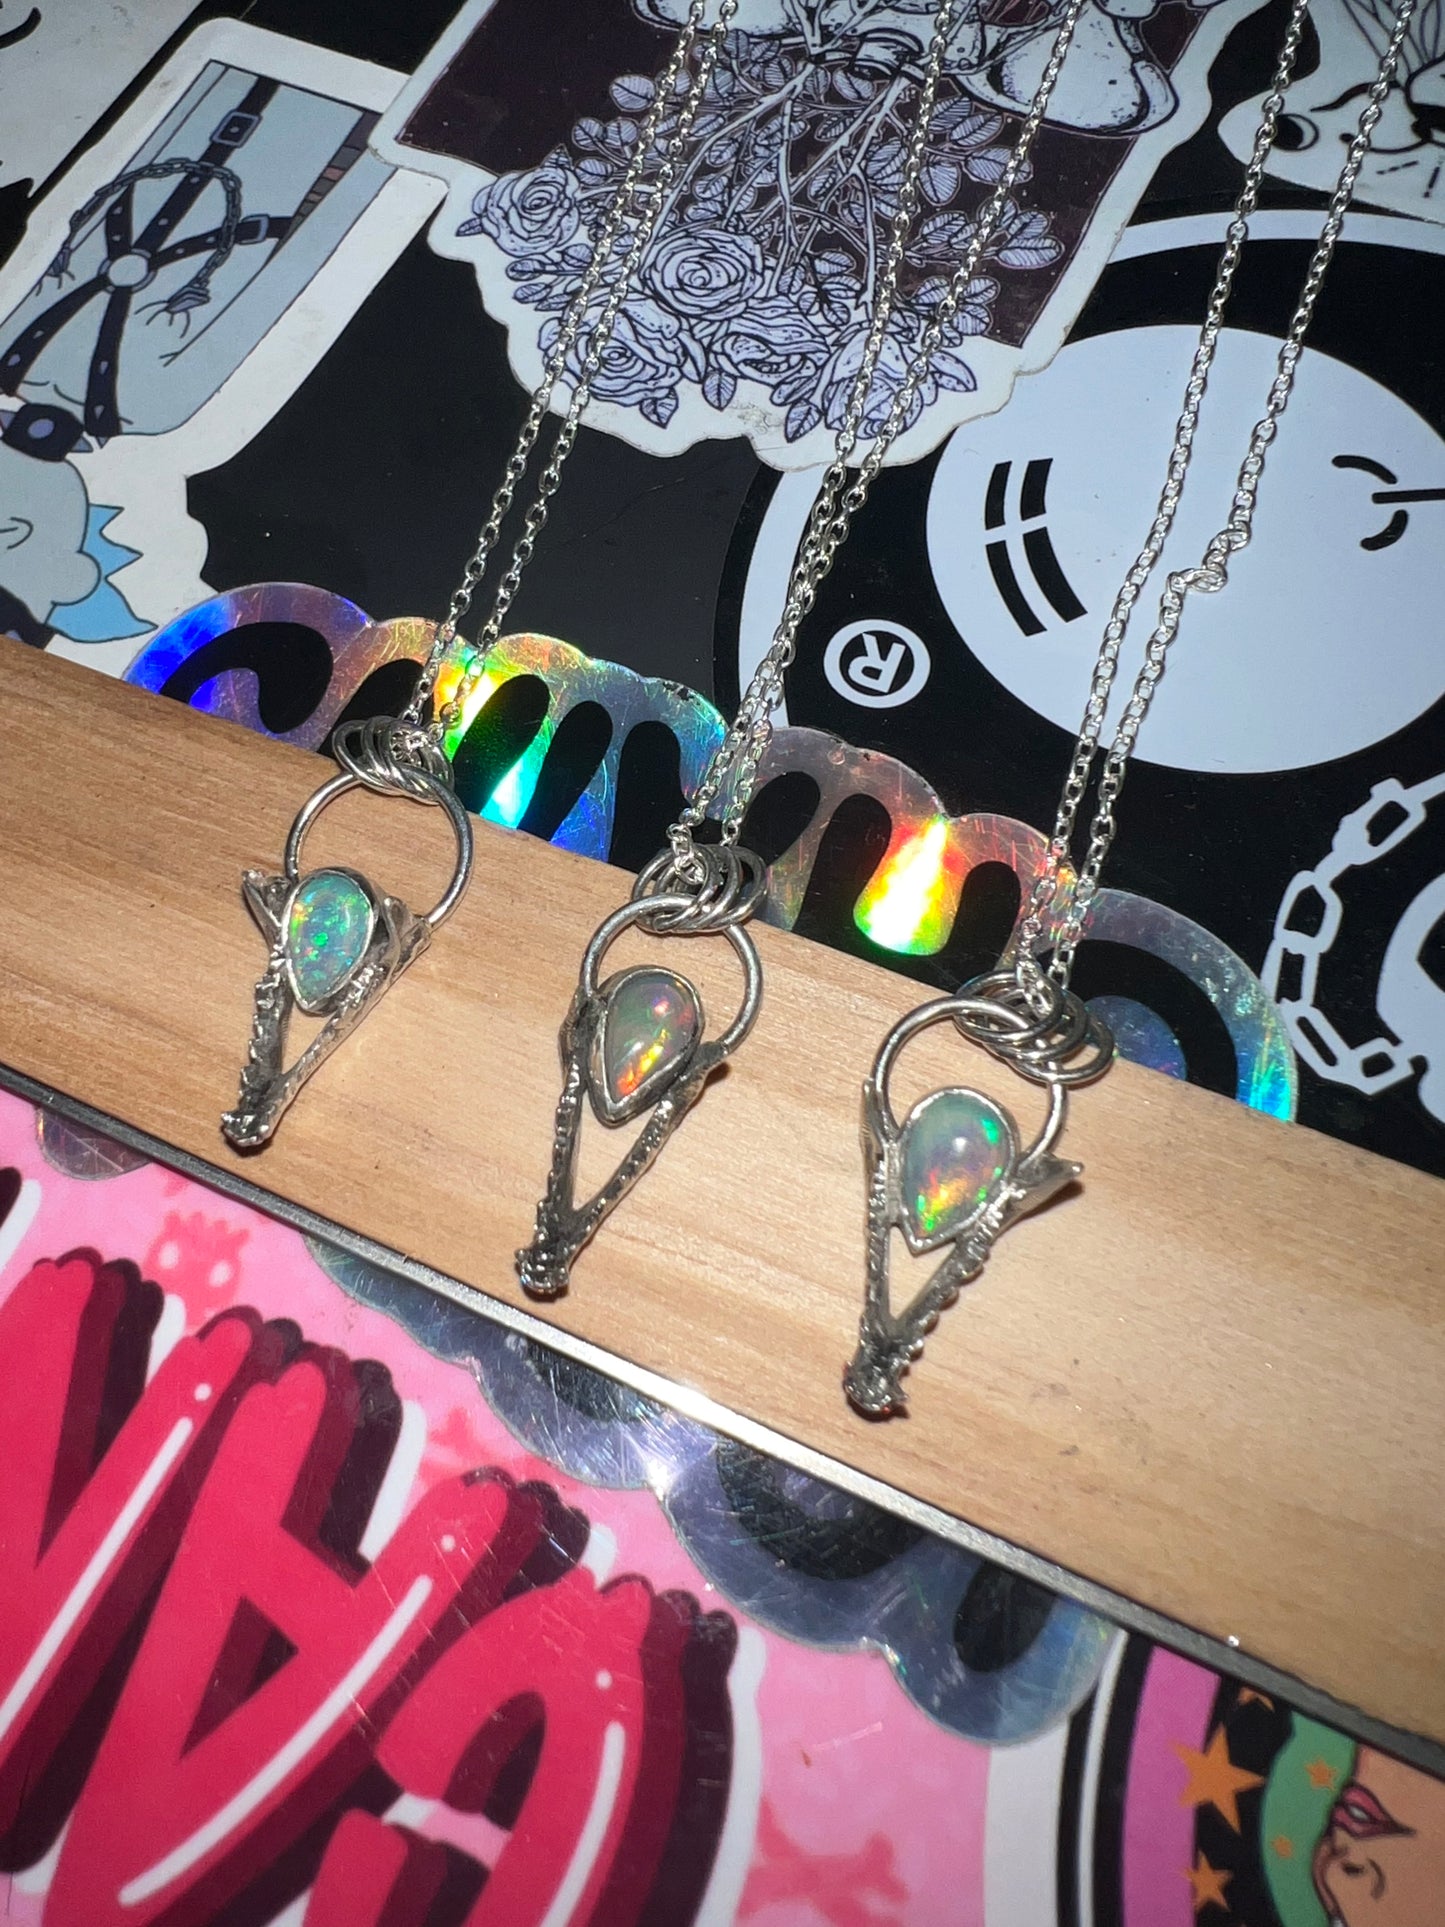 Vixen Opal Necklace